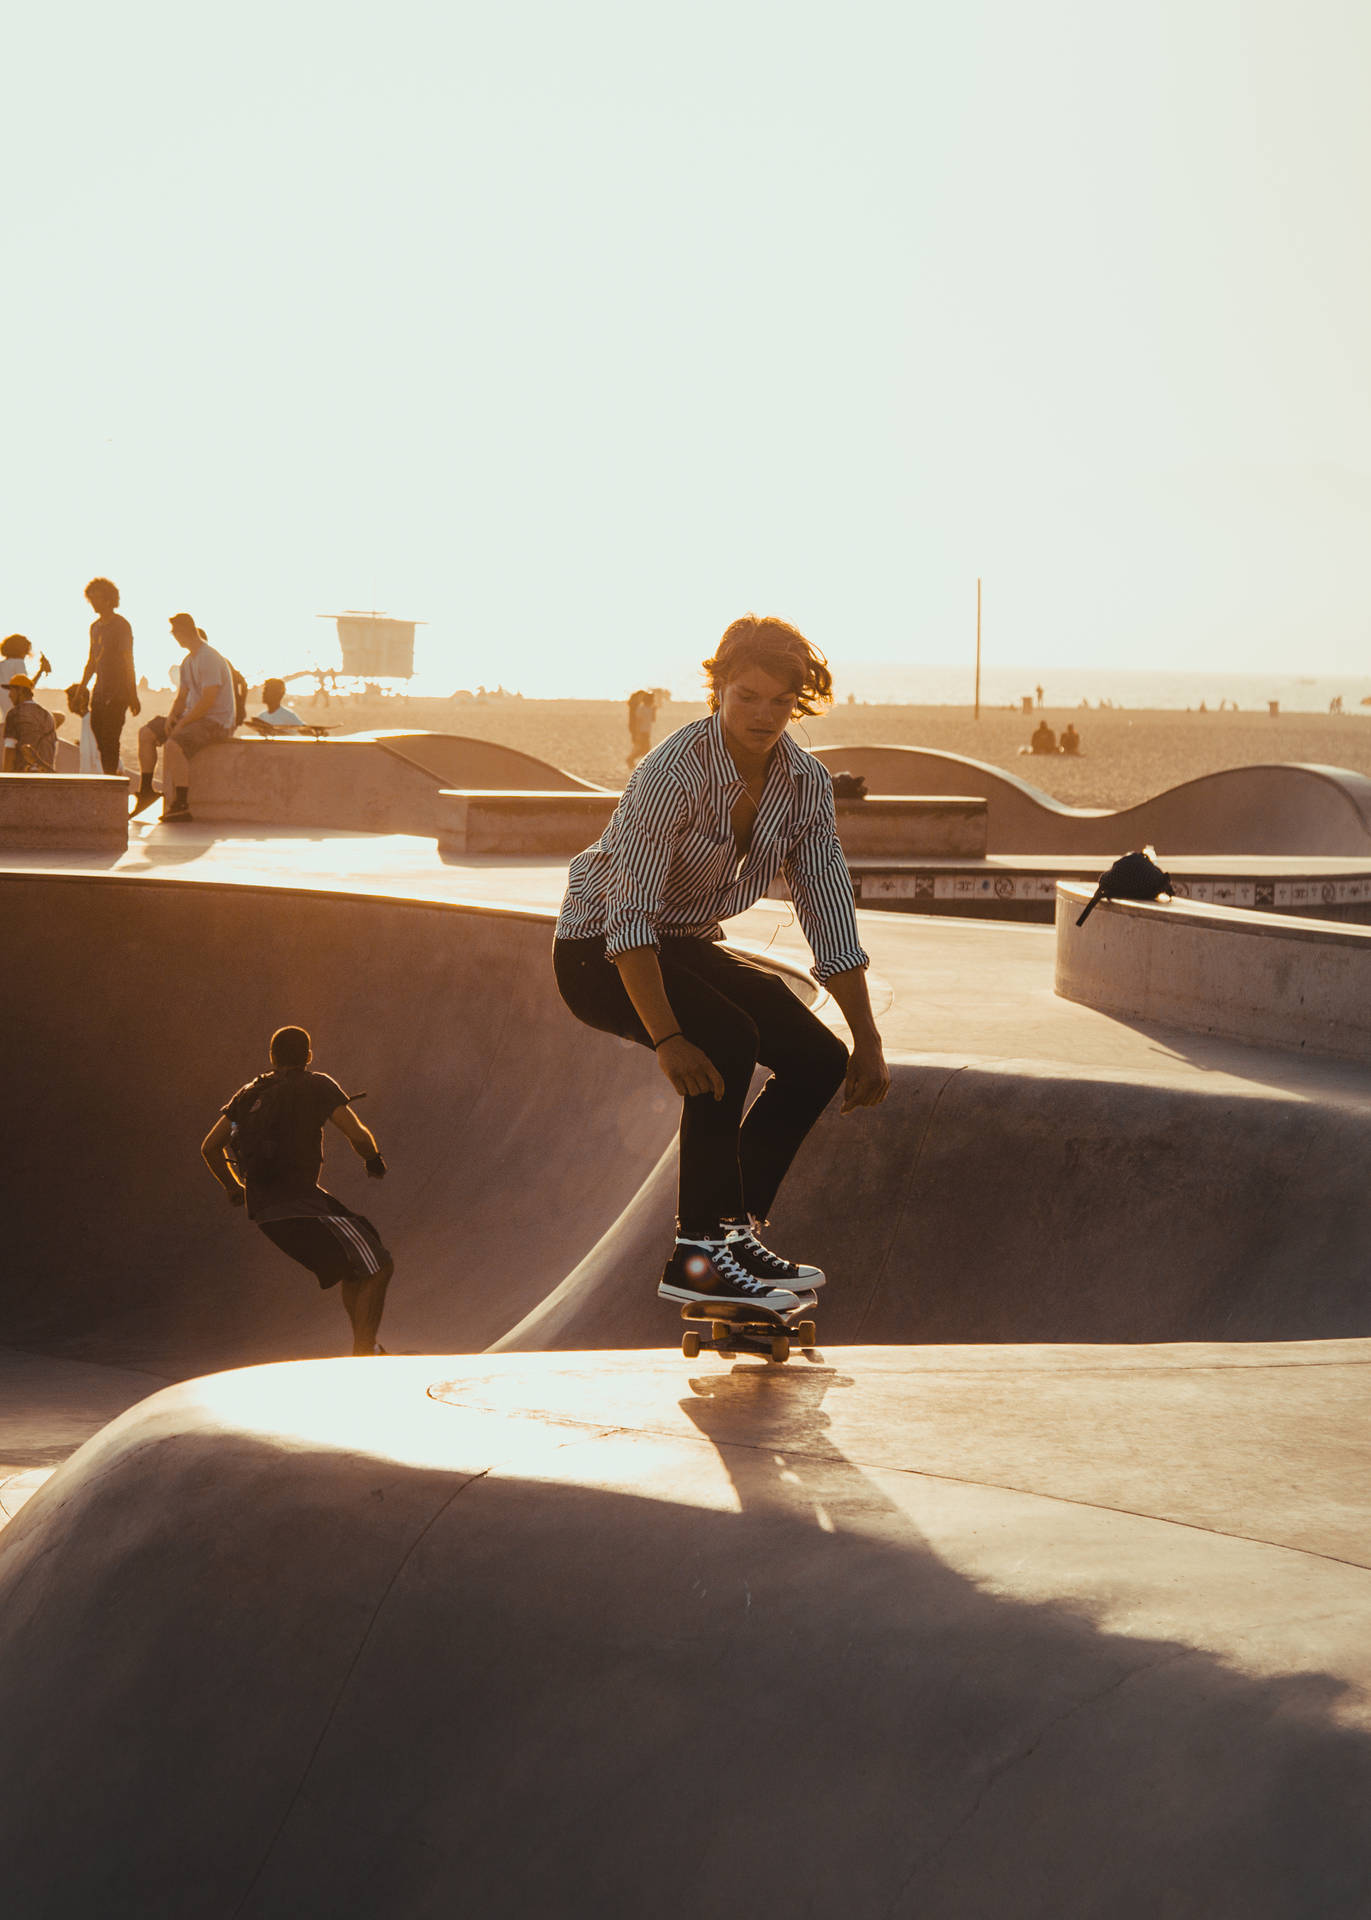 Hipster Skateboard Park